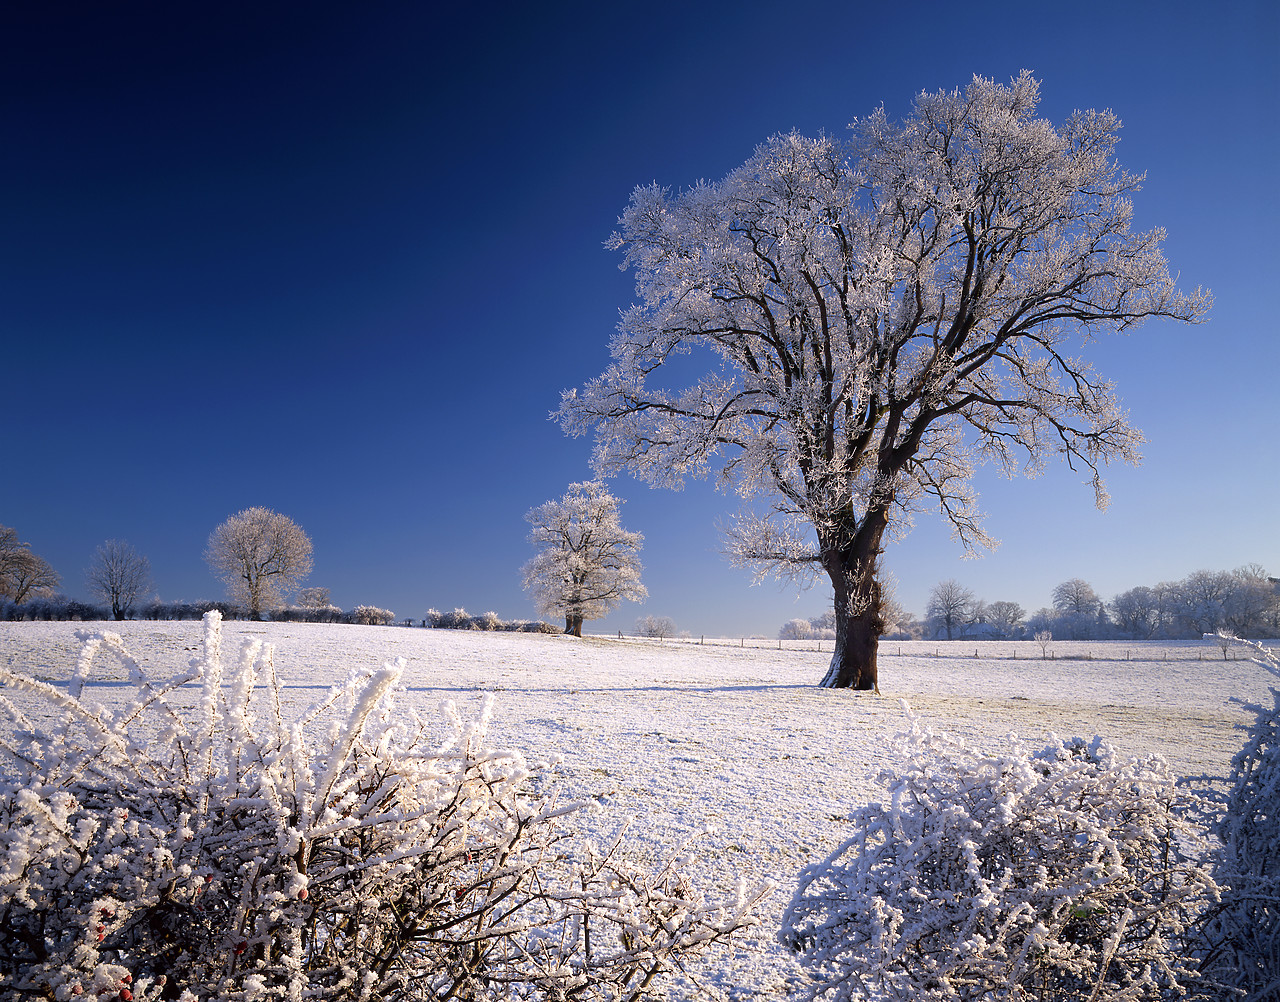 #955897-1 - Trees in Frost, Surlingham, Norfolk, England